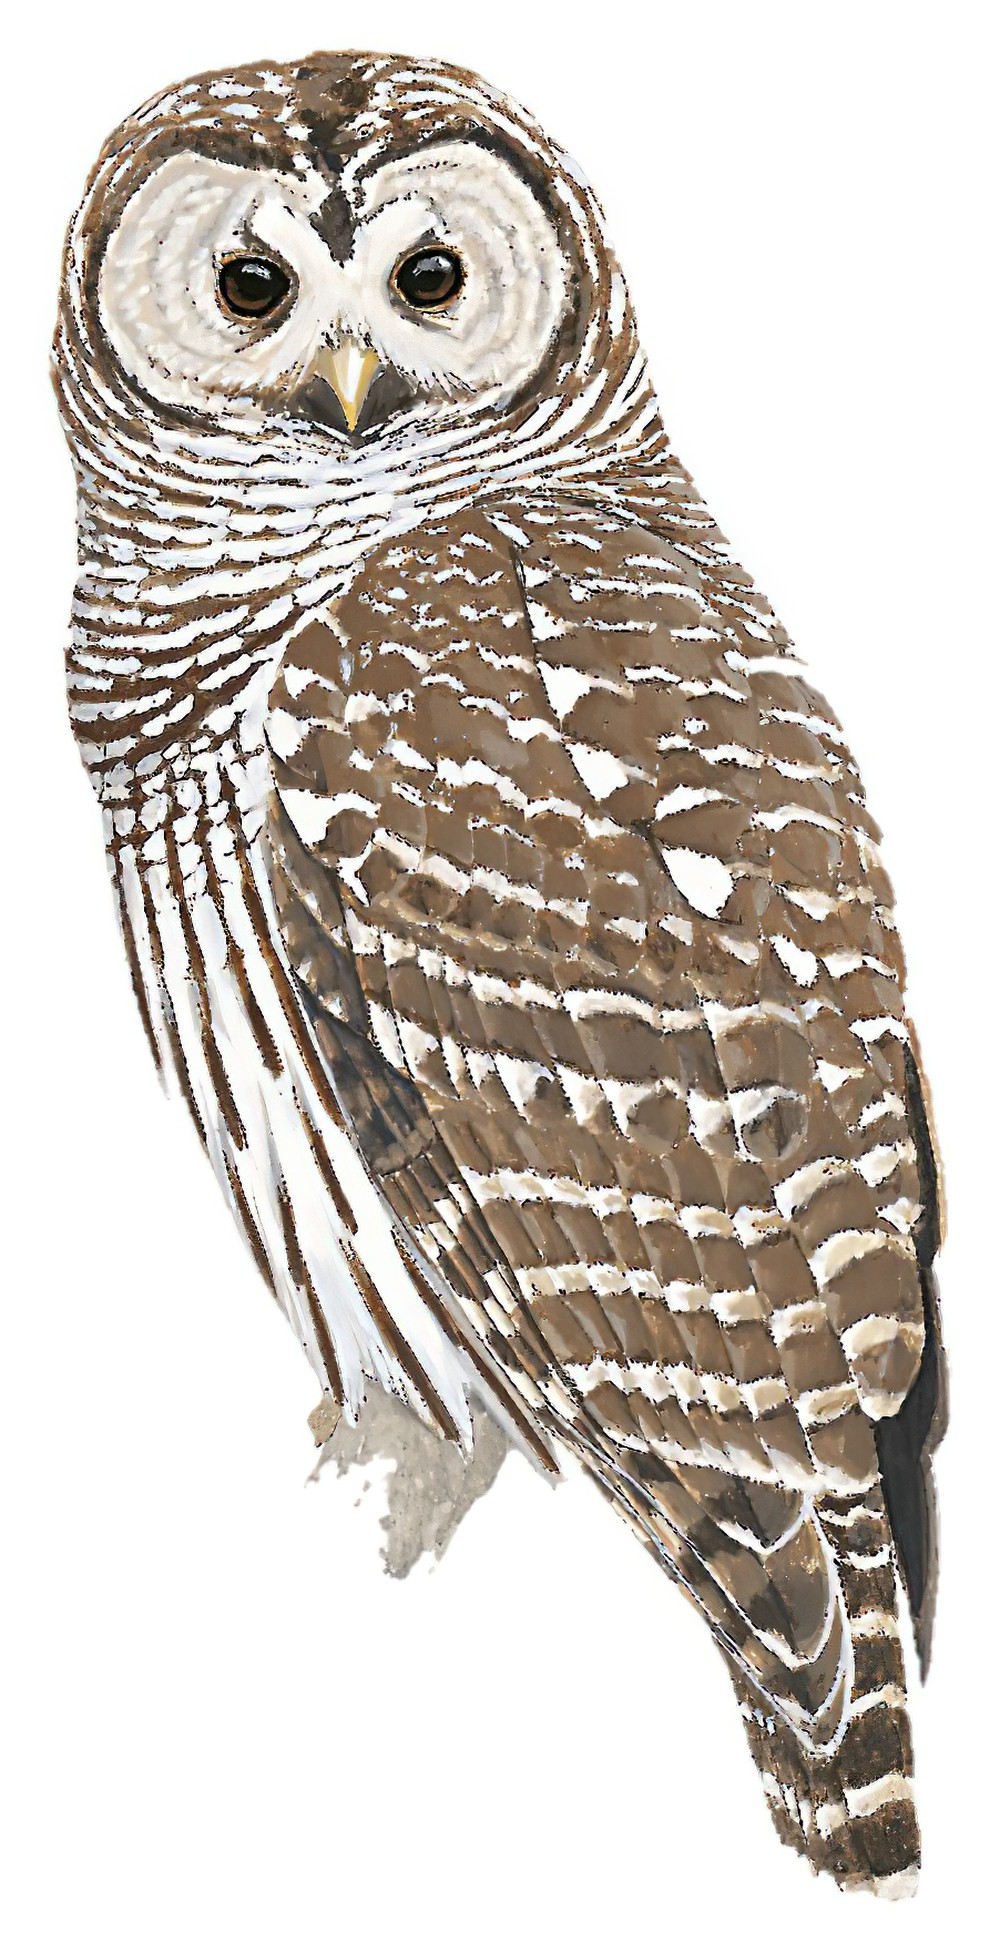 Barred Owl / Strix varia